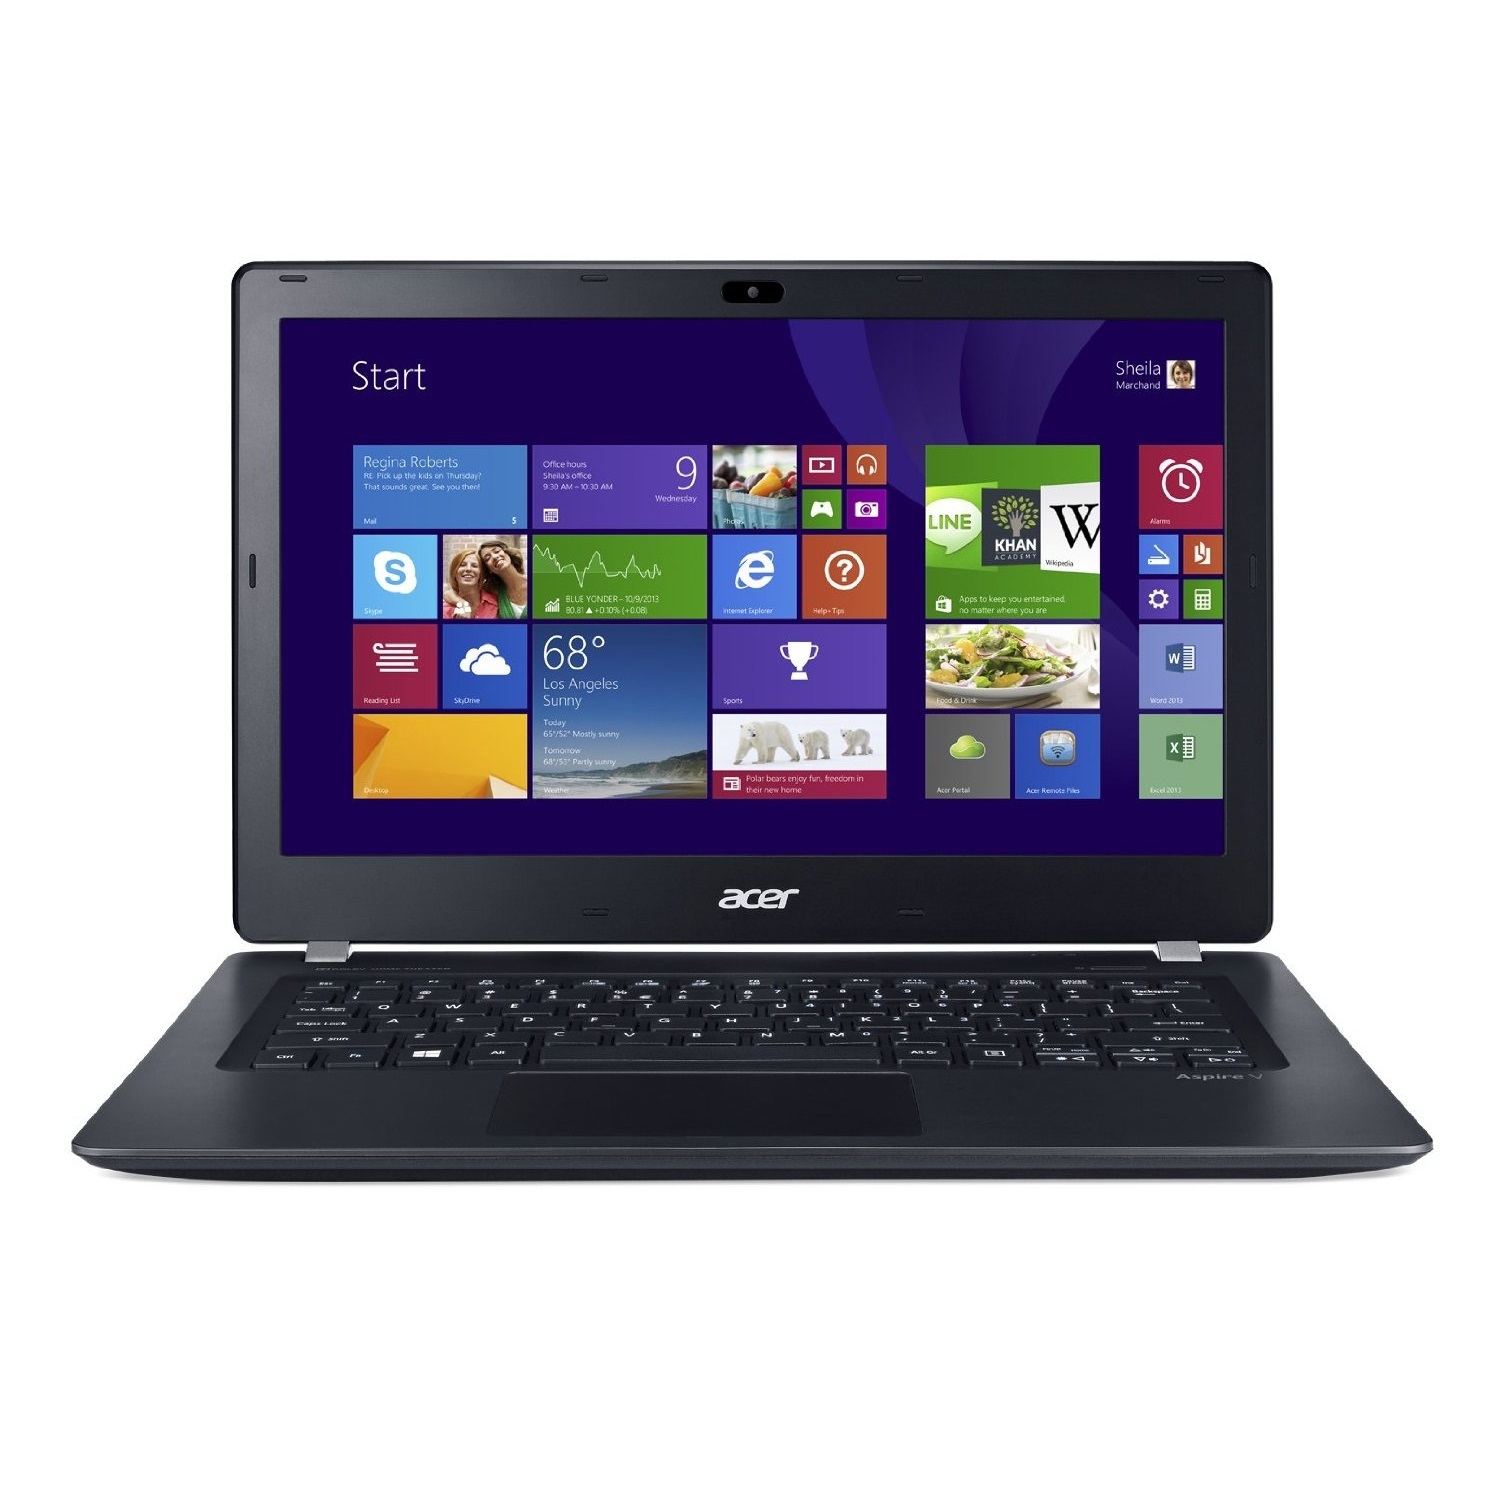 Laptop Acer Aspire V3 371-578U NX.MPGSV.001 - Intel Core i5 4210U 1.7Ghz, RAM 4GB, HDD 500GB,Intel HD Graphics VGA onboard, 13.3Inch